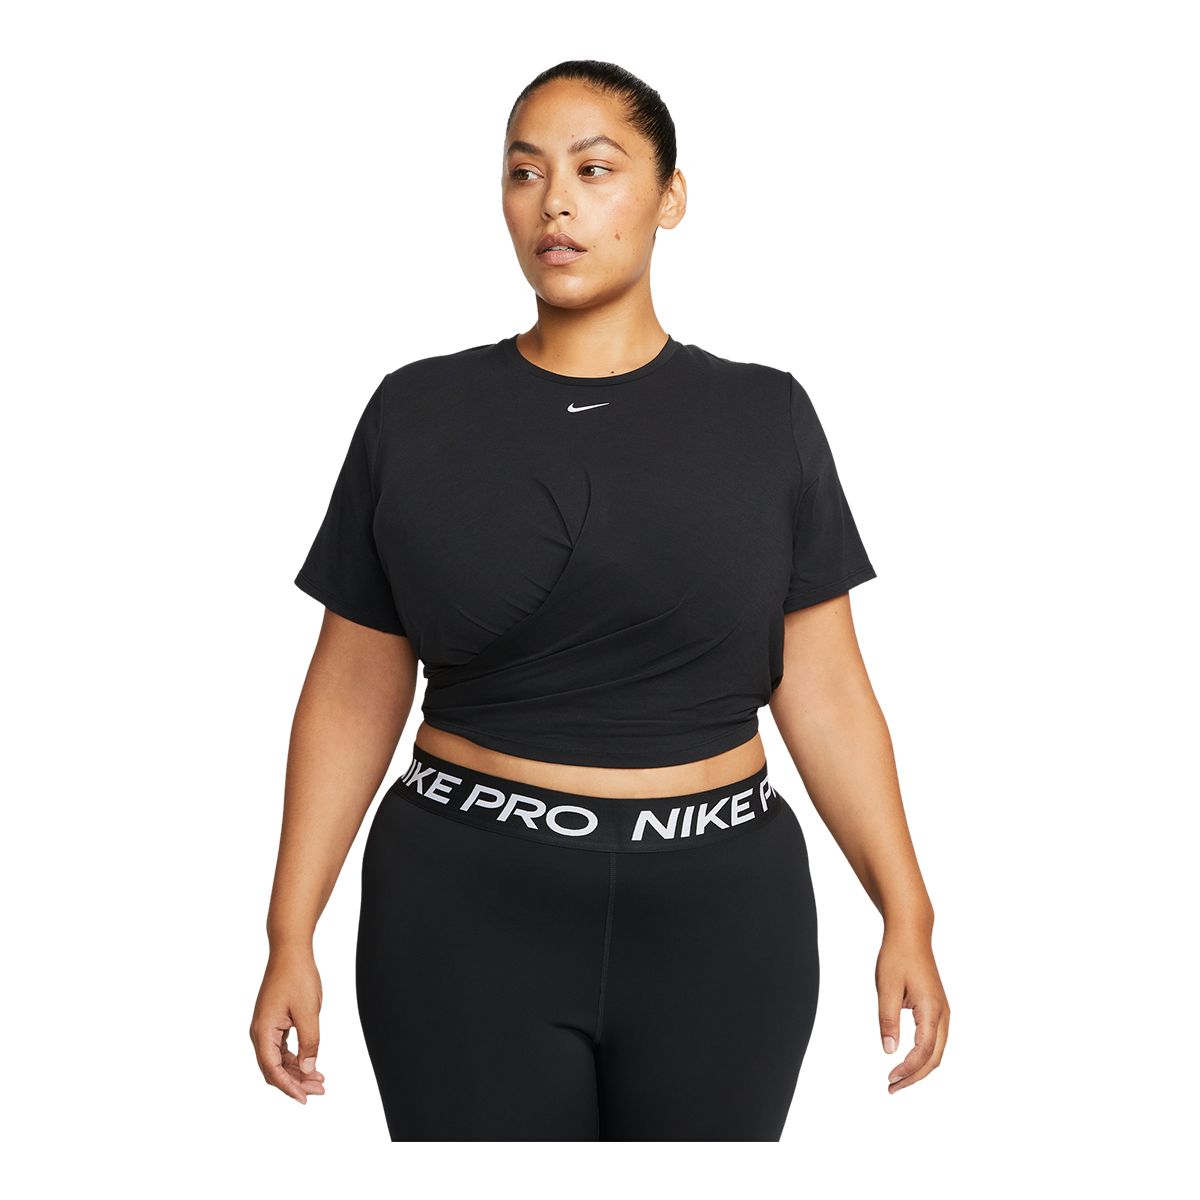 Nike Dri Fit Racer Back Tank Top Black Stripe Design Women's Size